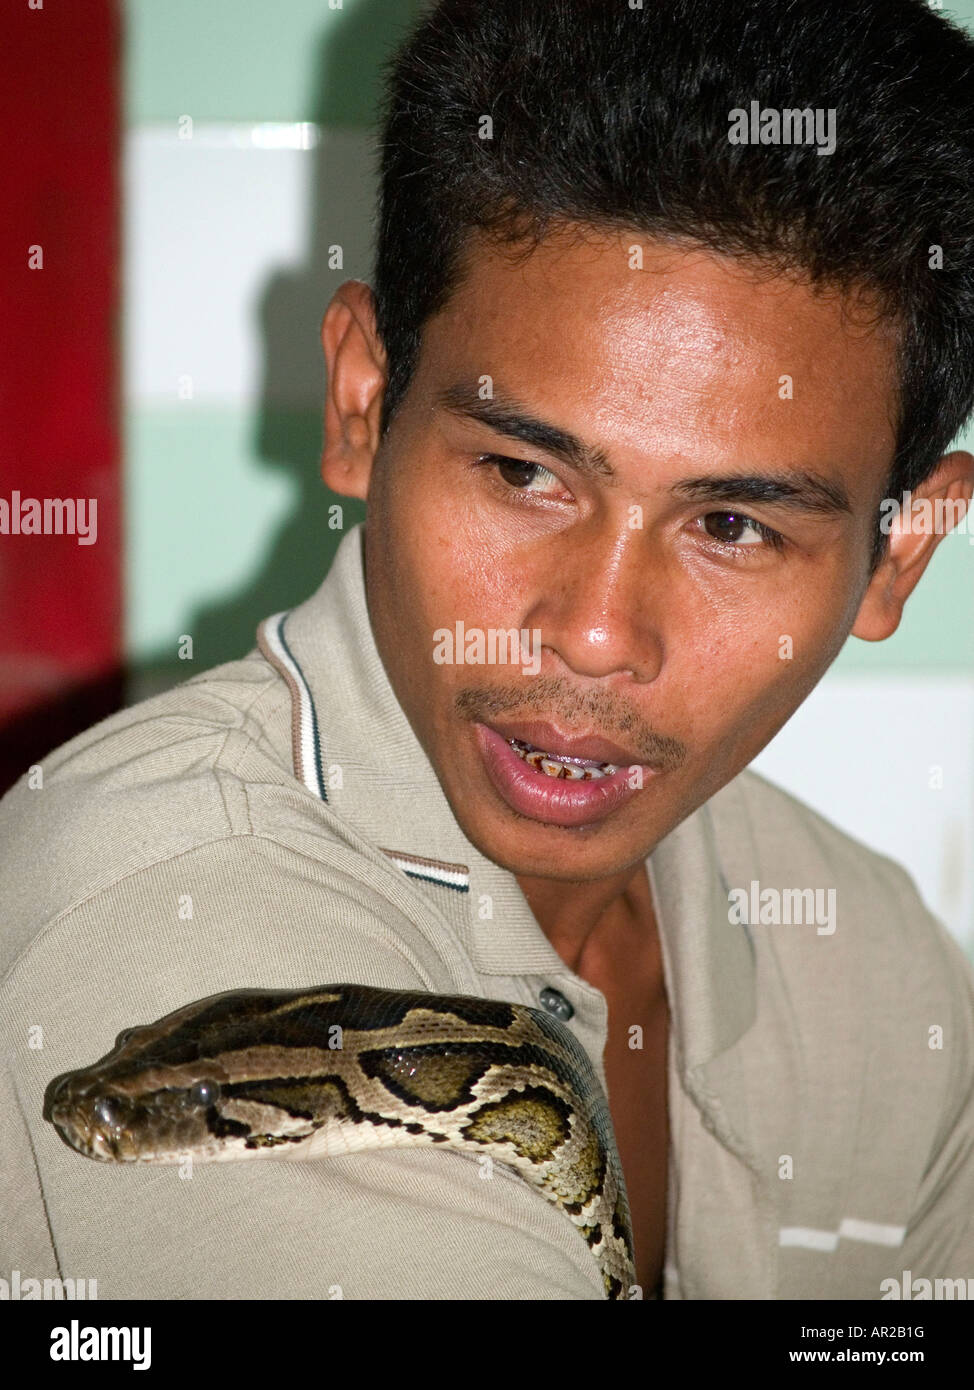 Portrait Of Burmese Python Handler At Temple In Myanmar Stock Photo Alamy